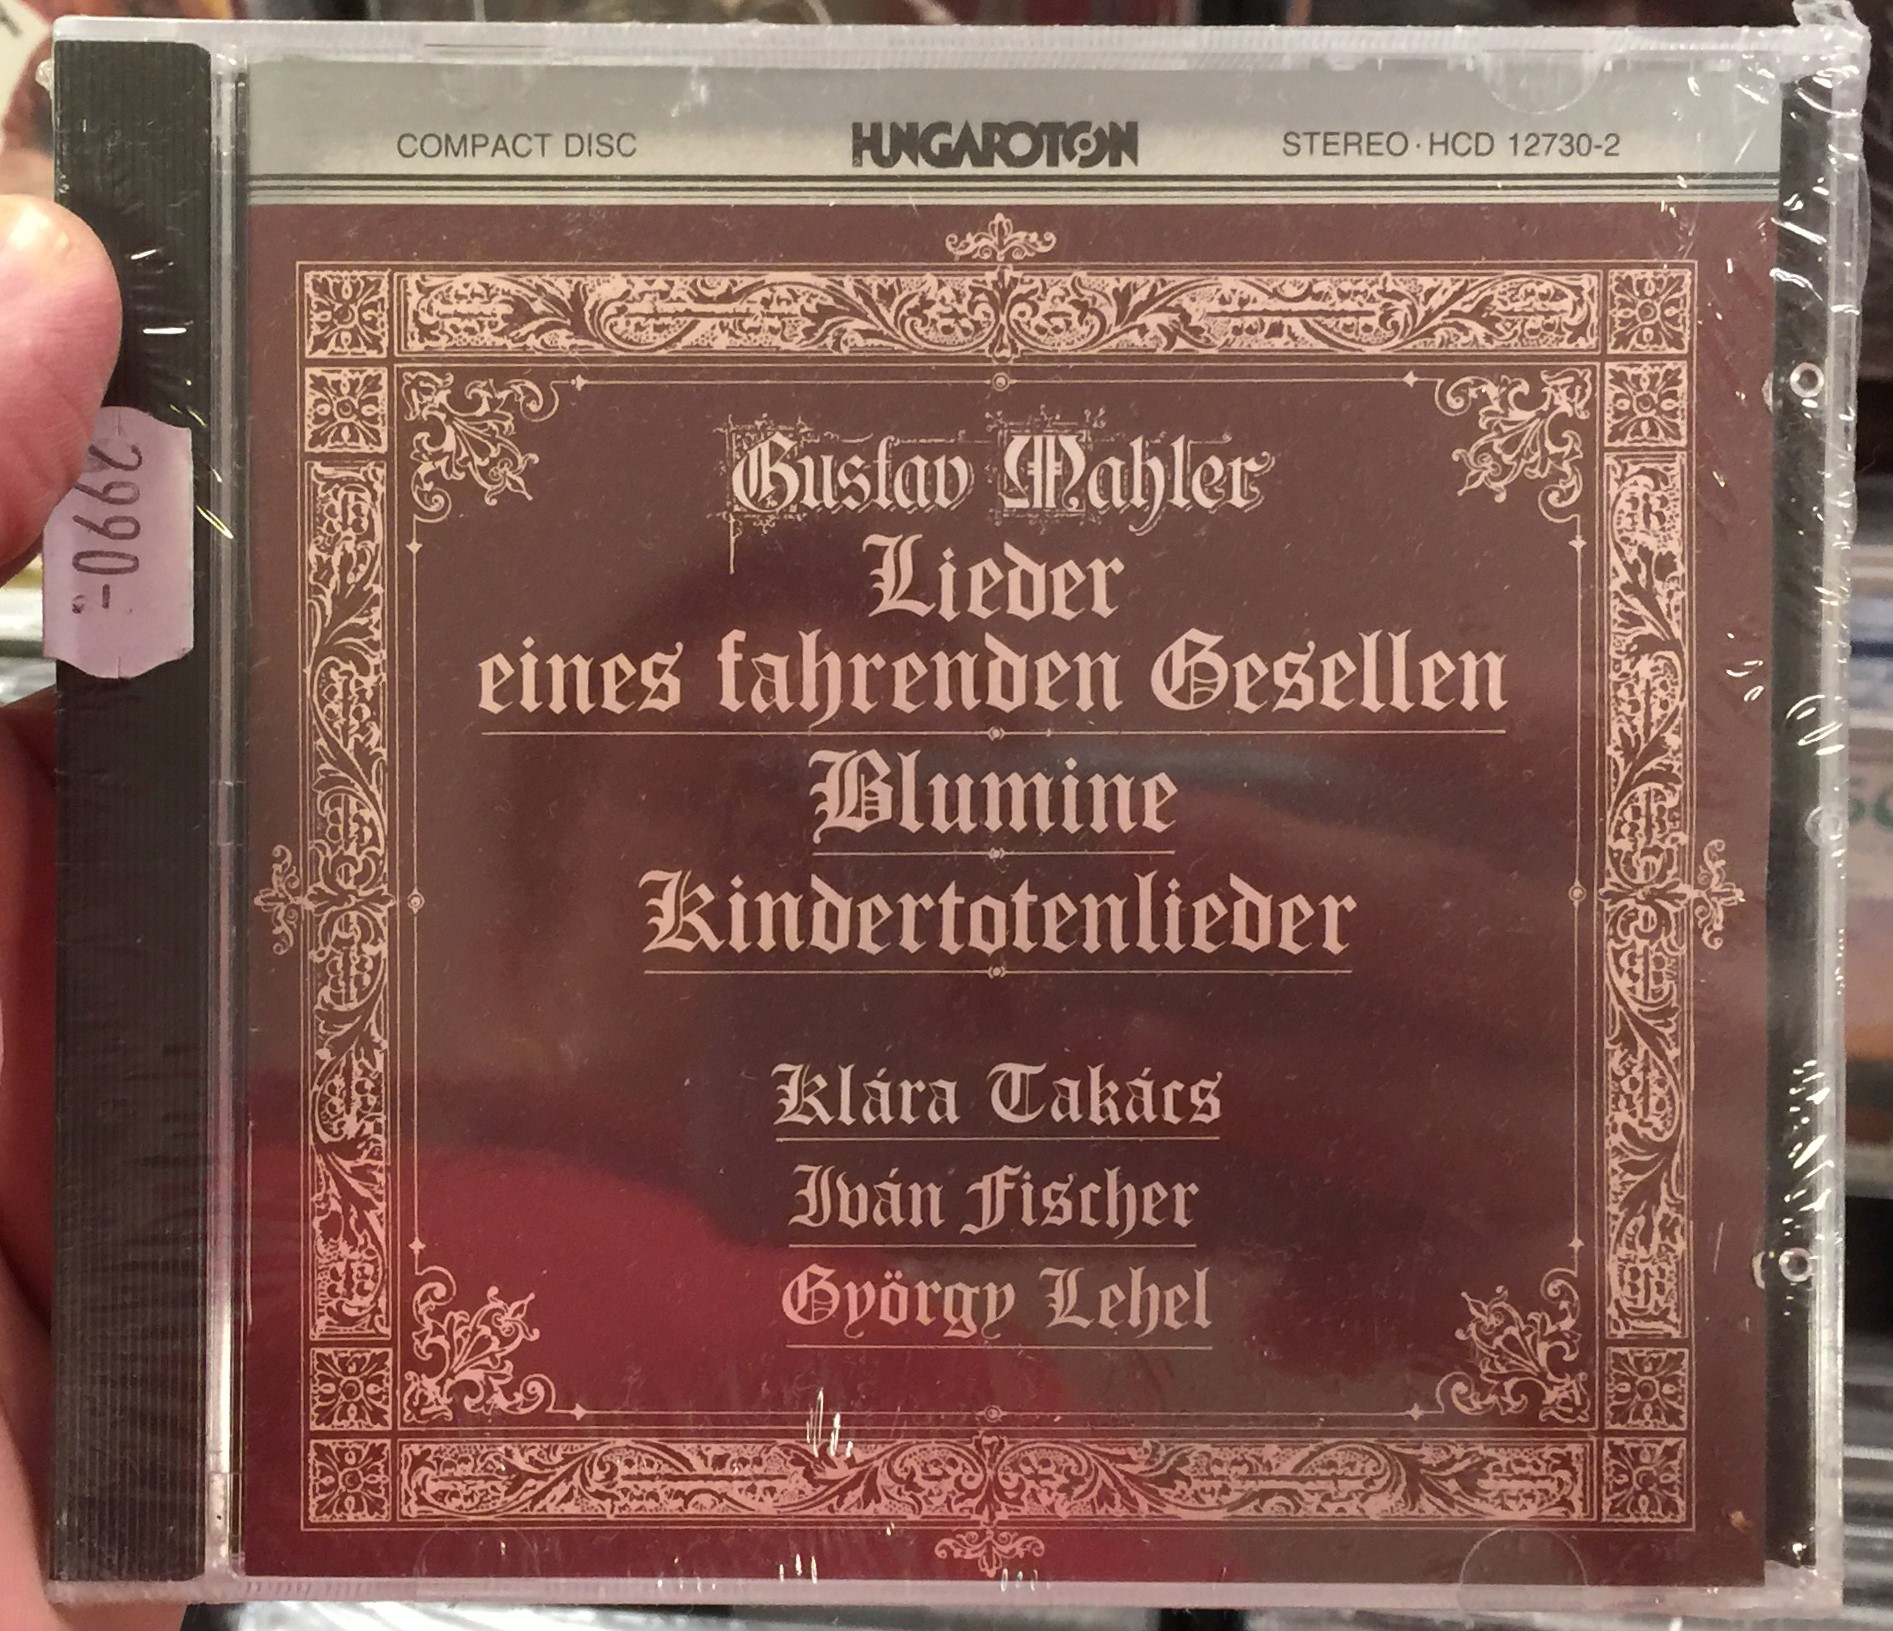 gustav-mahler-lieder-eines-fahrenden-gesellen-blumine-kindertotenlieder-klara-takacs-ivan-fischer-gyorgy-lehel-hungaroton-audio-cd-1985-stereo-hcd-12730-2-1-.jpg